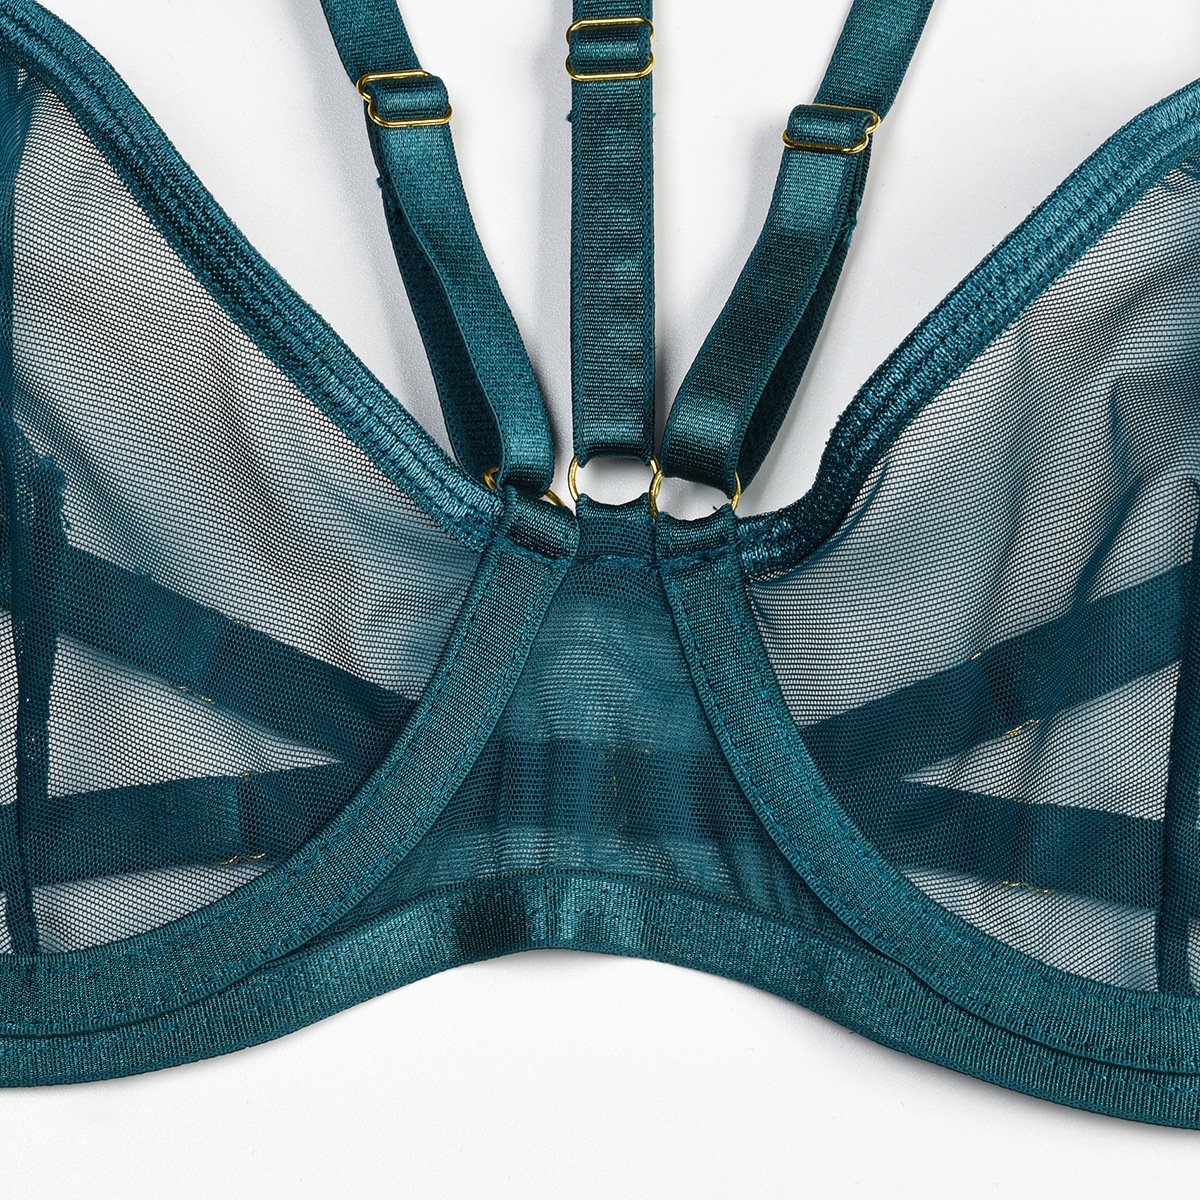 Harness mesh underwire garter lingerie set